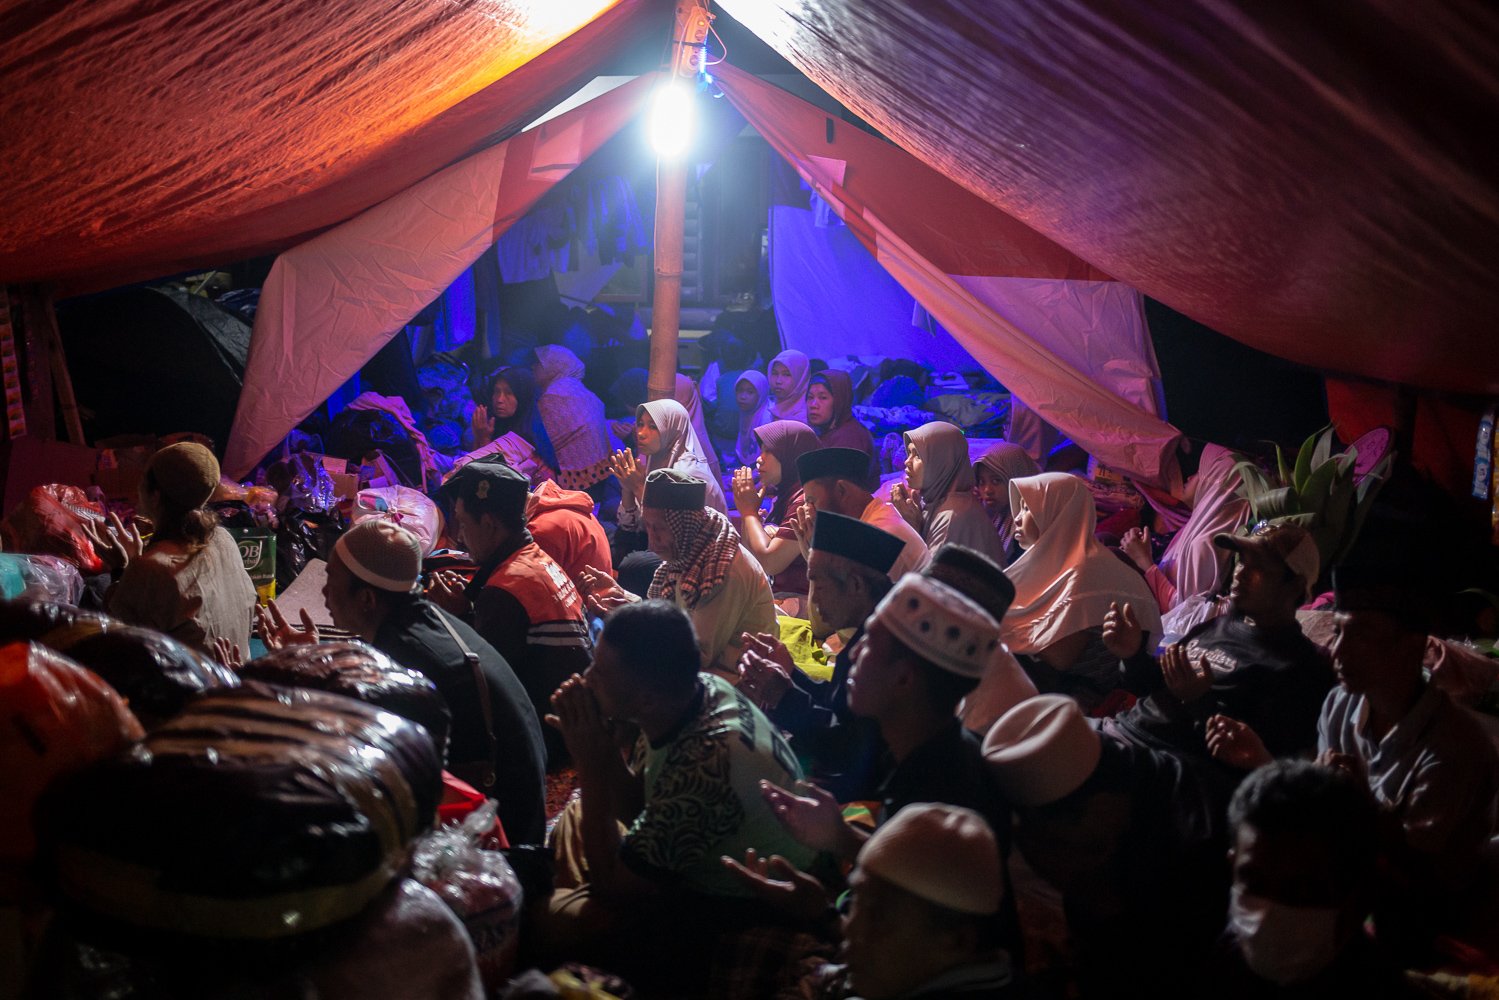 Sejumlah pengungsi berdoa bersama di tenda pengungsian pasca gempa bumi dengan magnitude 5.6 di Desa Gasol, Cugenang, Cianjur, Jawa Barat, Minggu (27/11). Badan Nasional Penanggulangan Bencana (BNPB) mencatat total 321 orang meninggal dunia, jumlah pengungsi hingga hari ini mencapai 73.874 orang akibat gempa di Cianjur.